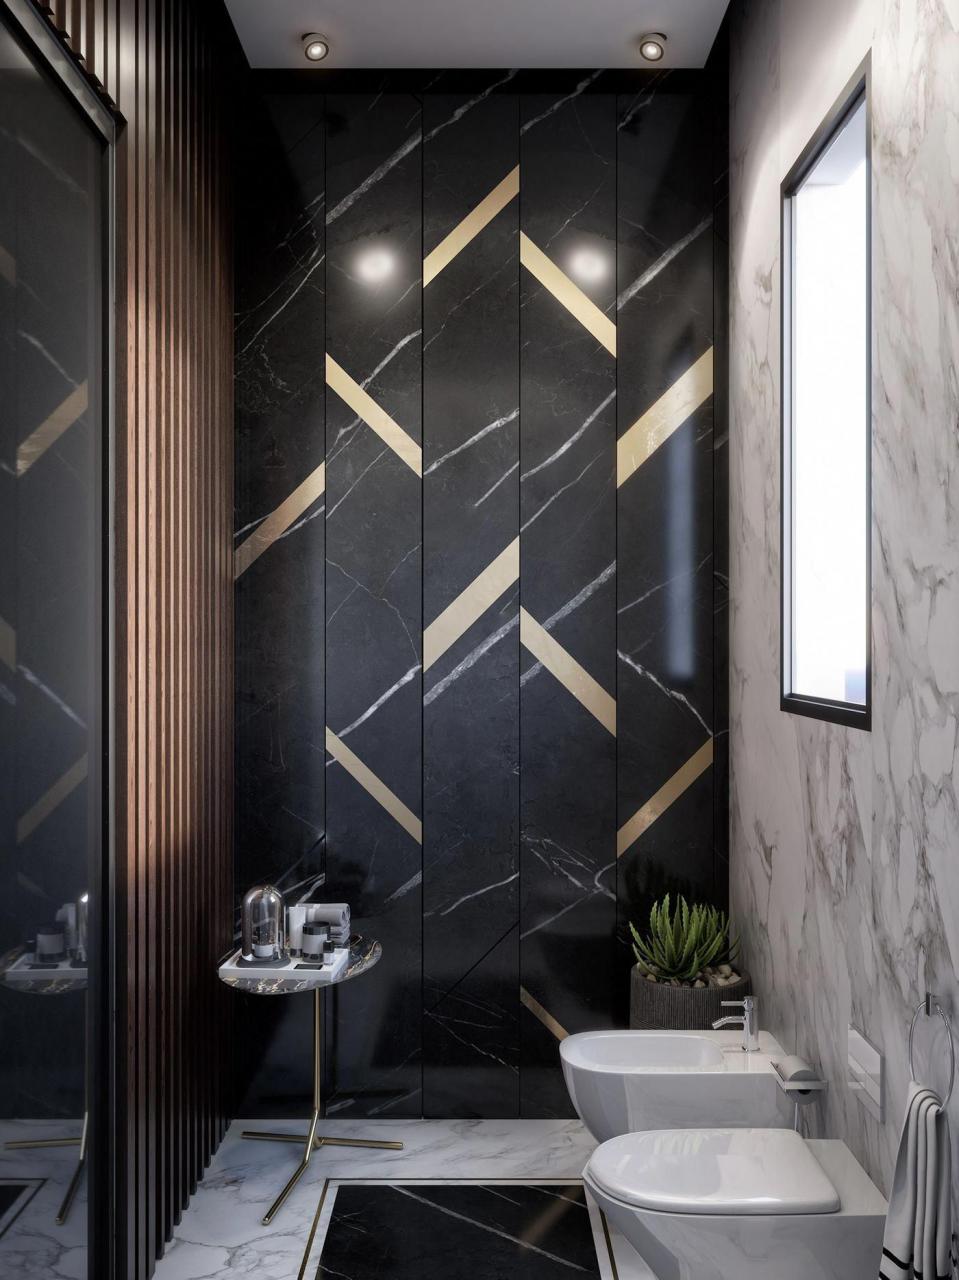 Tile pattern 28 Bathroom Wall Decor Ideas to Increase Bathroom’s Value